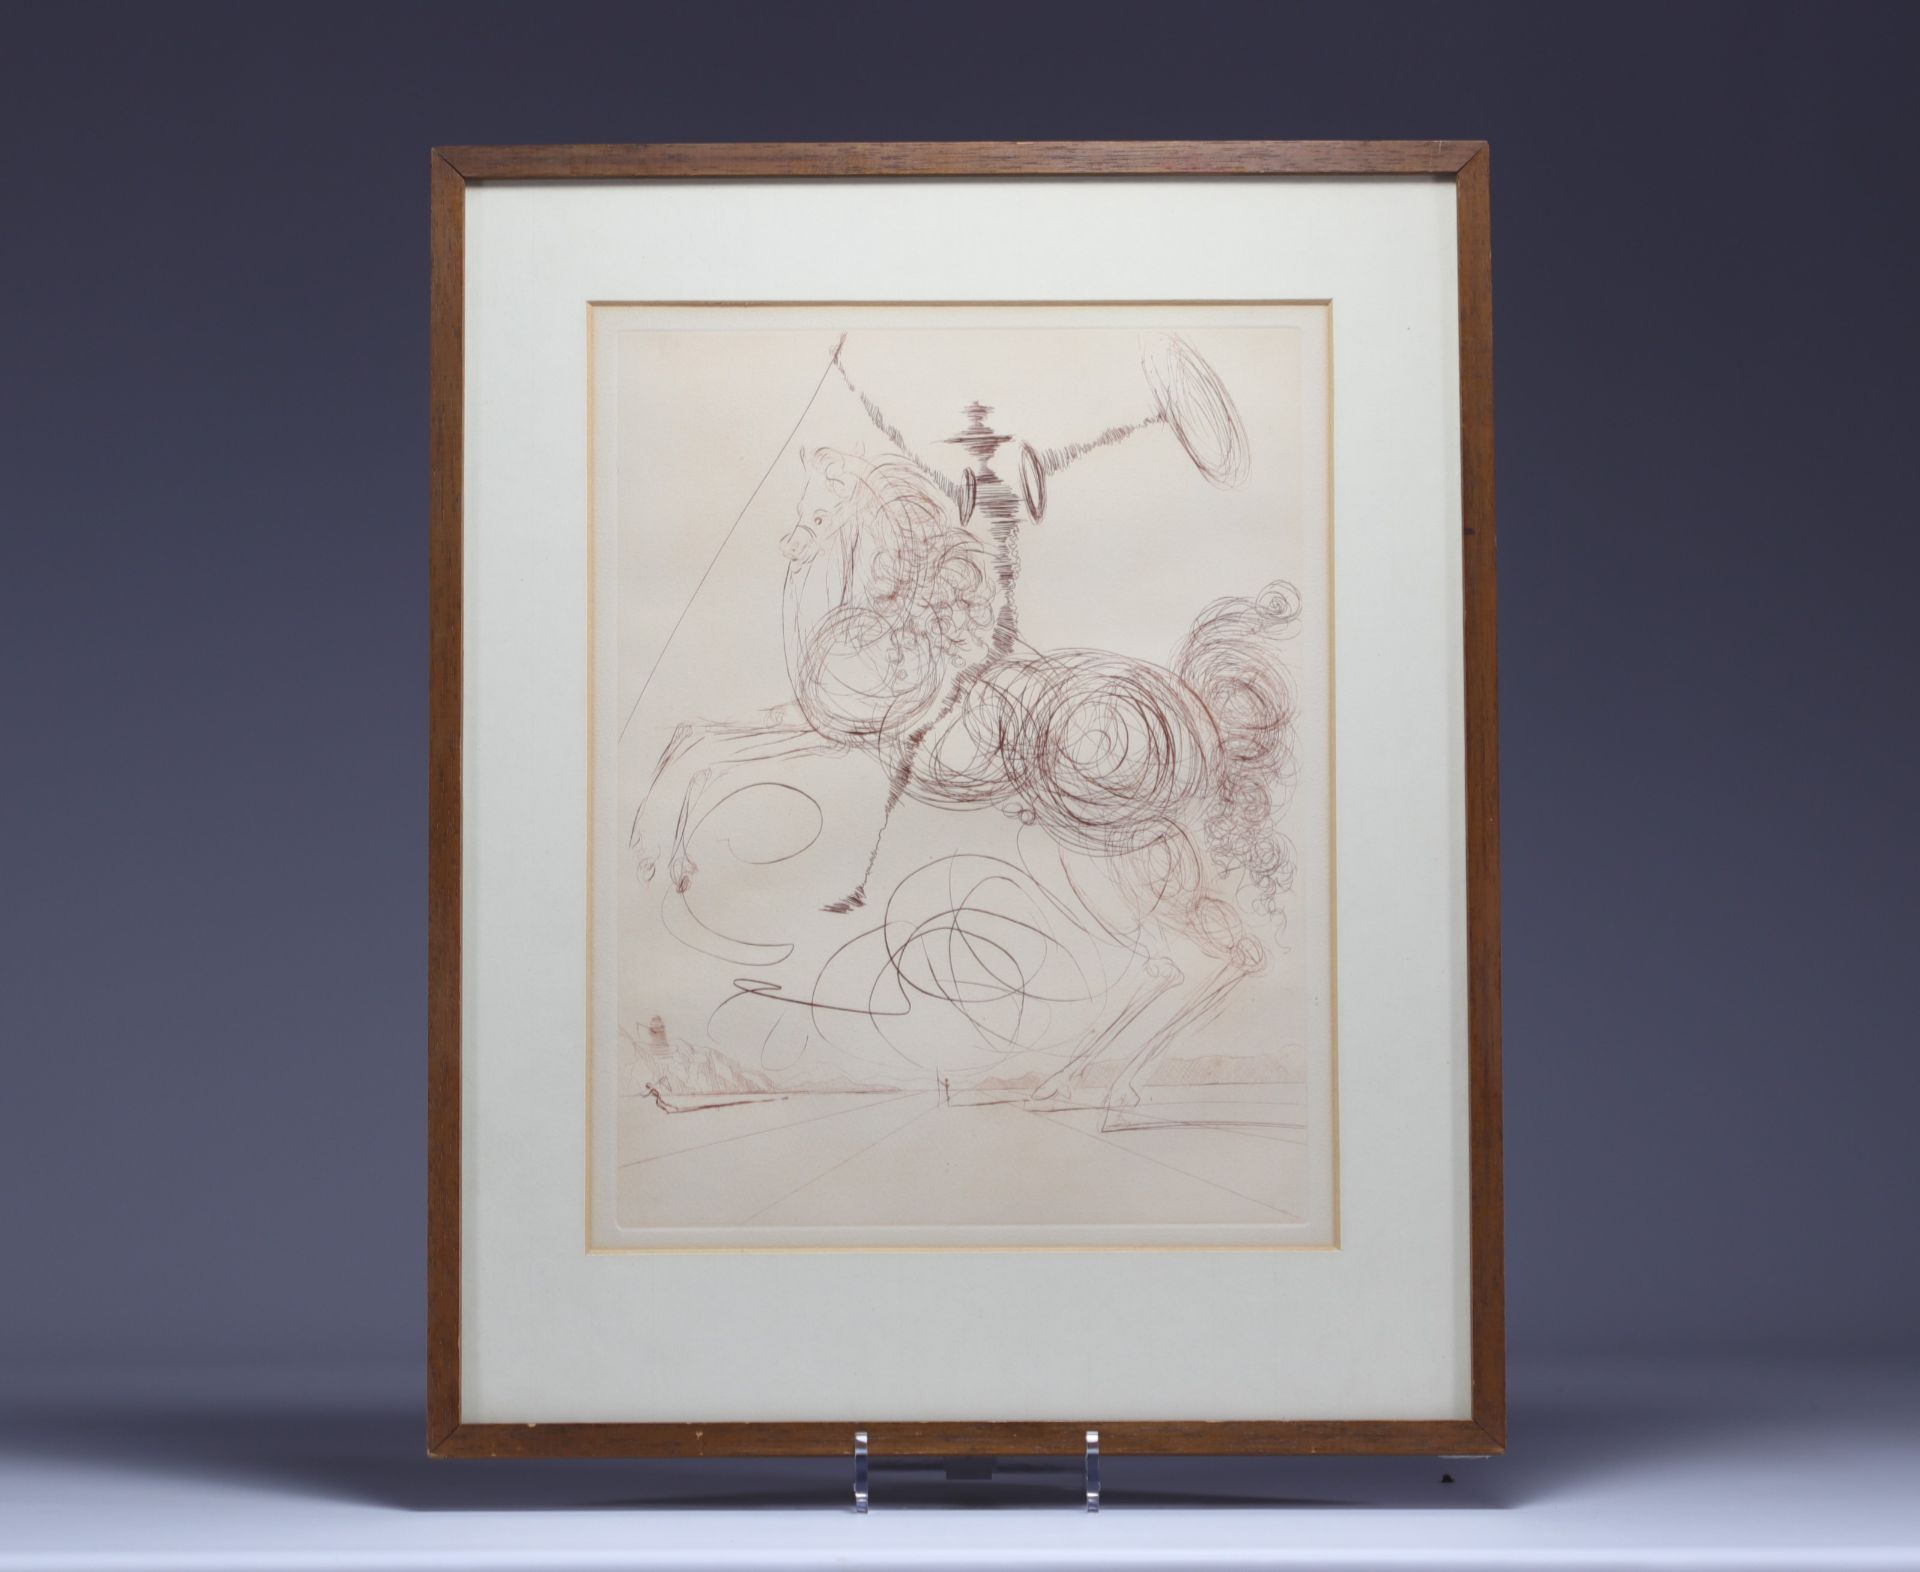 Salvador DALI (1904-1989) after. "Don Quixote" Lithograph. - Image 2 of 2